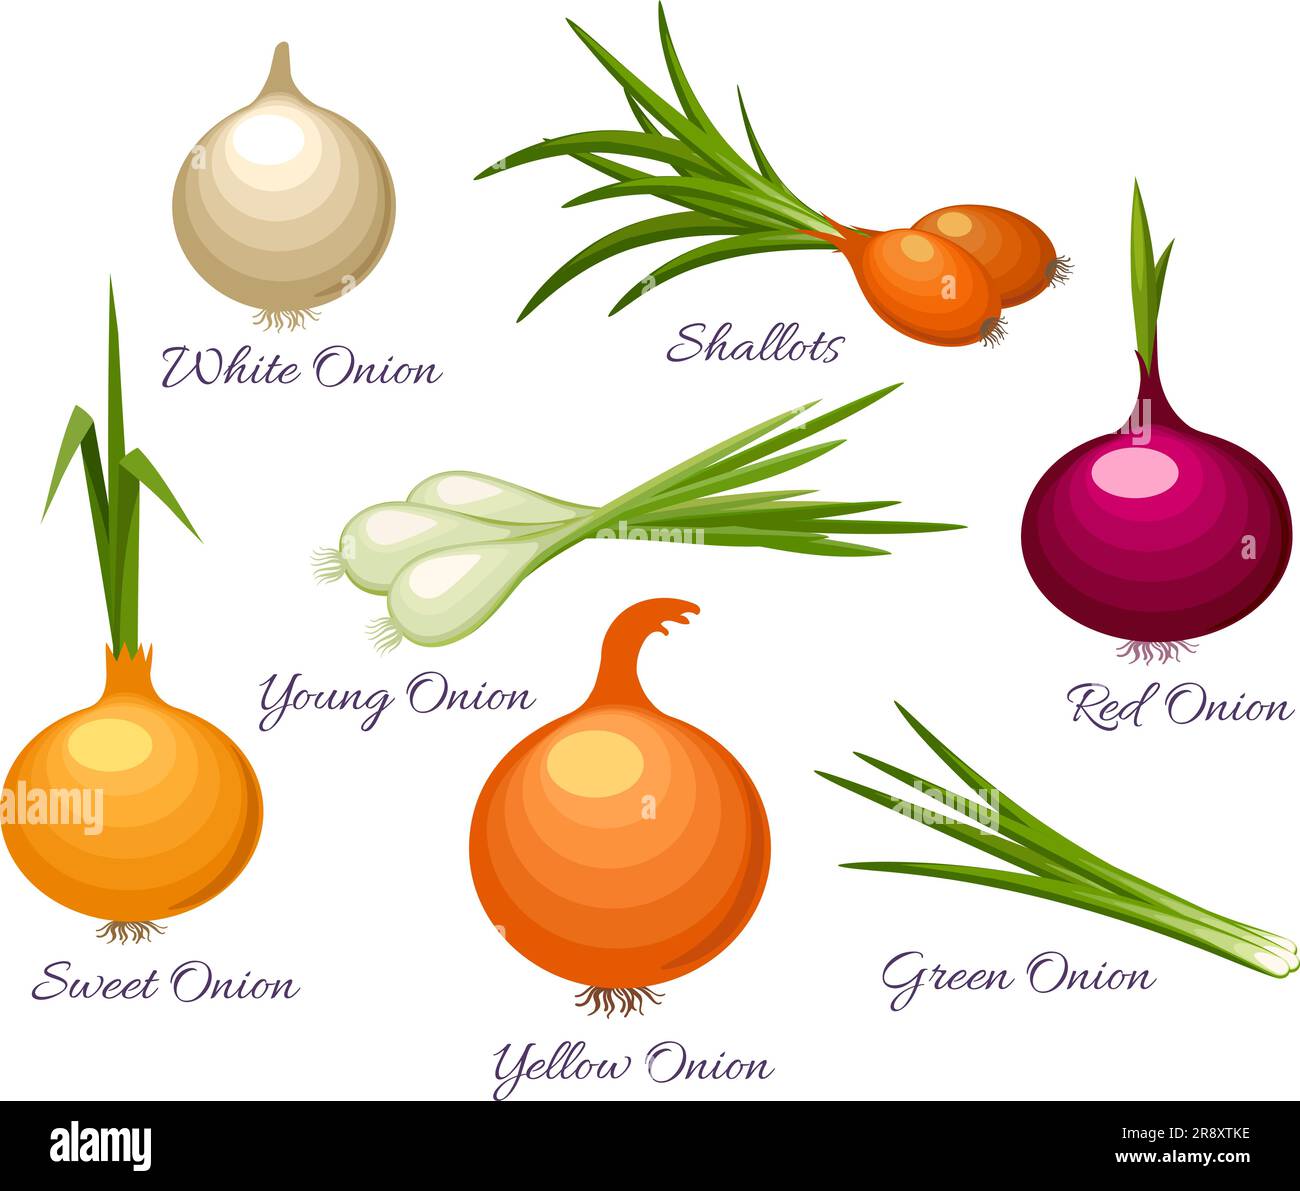 Onion organic vegetables types Stock Vector